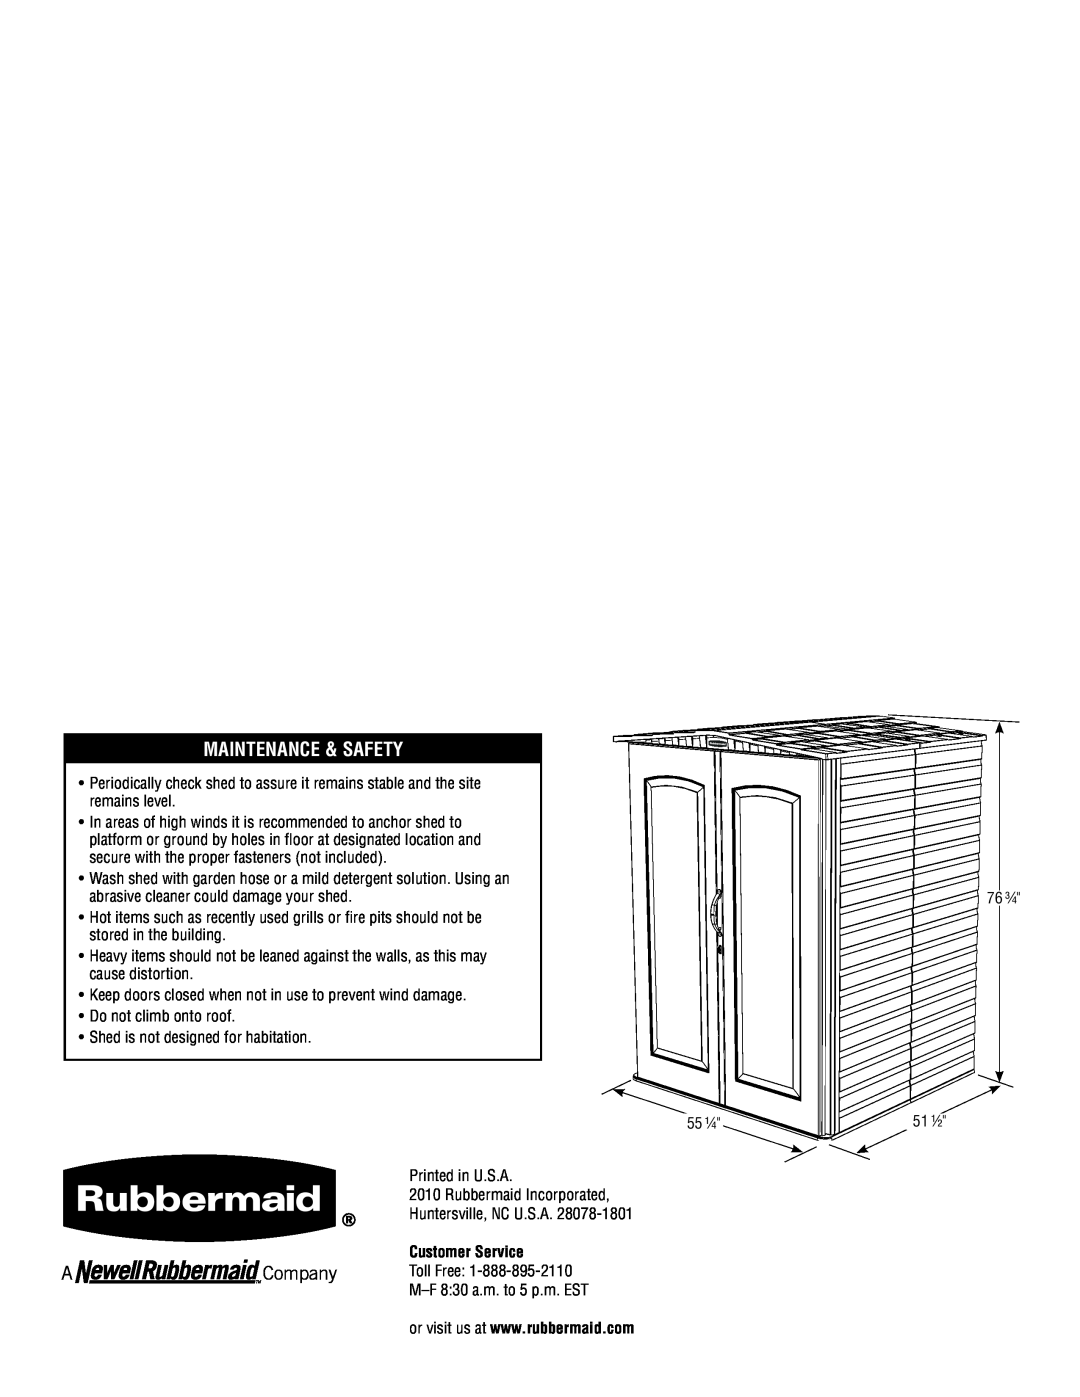 Rubbermaid 5L20 instruction manual Maintenance & Safety, Customer Service 